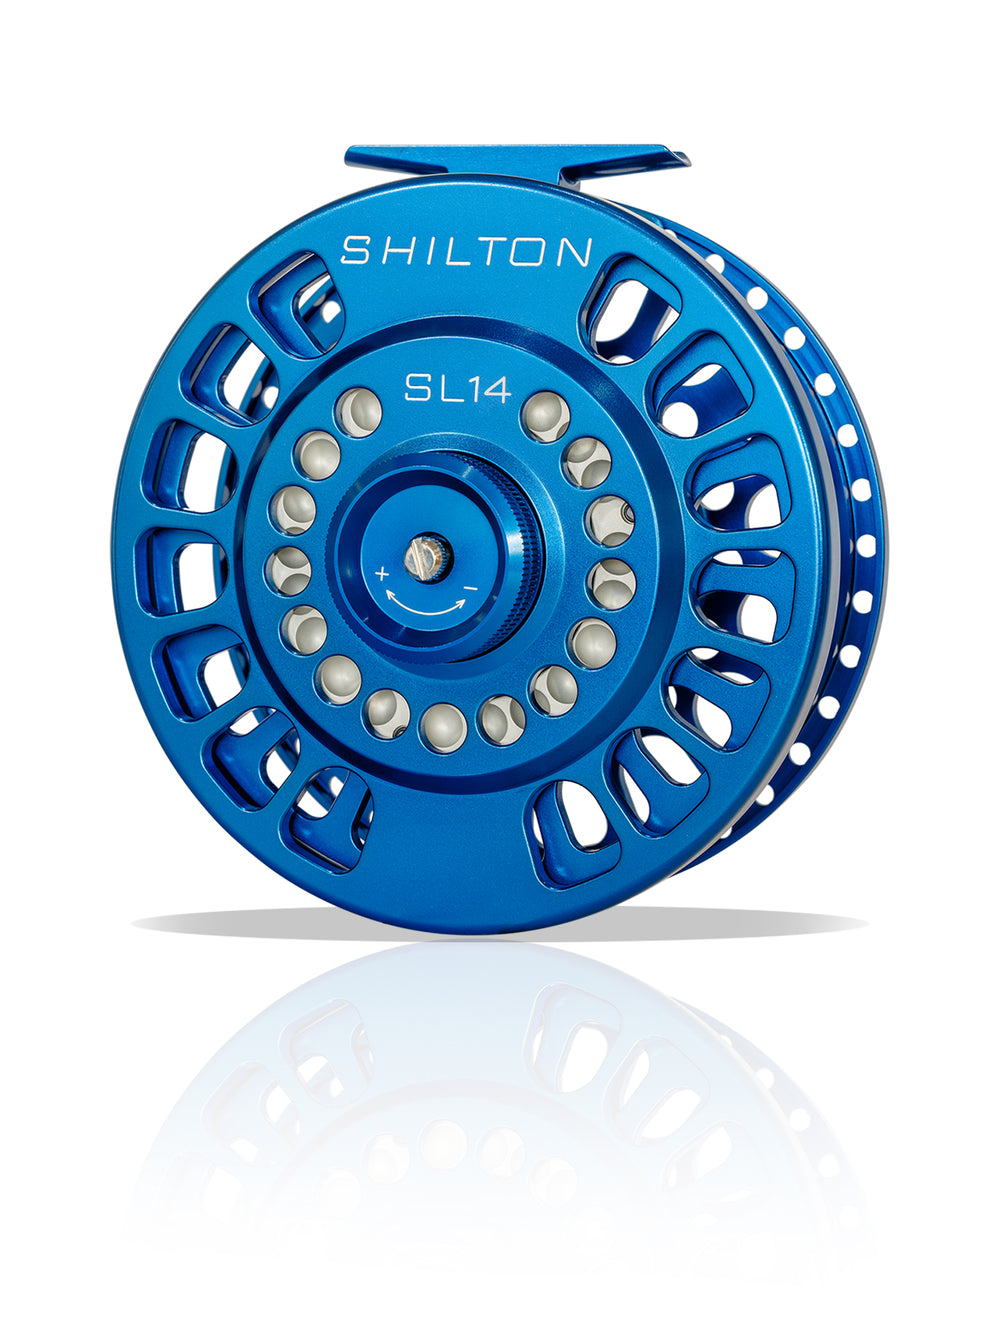 Shilton SL8 Reel (14-16wt) SL14 in Blue